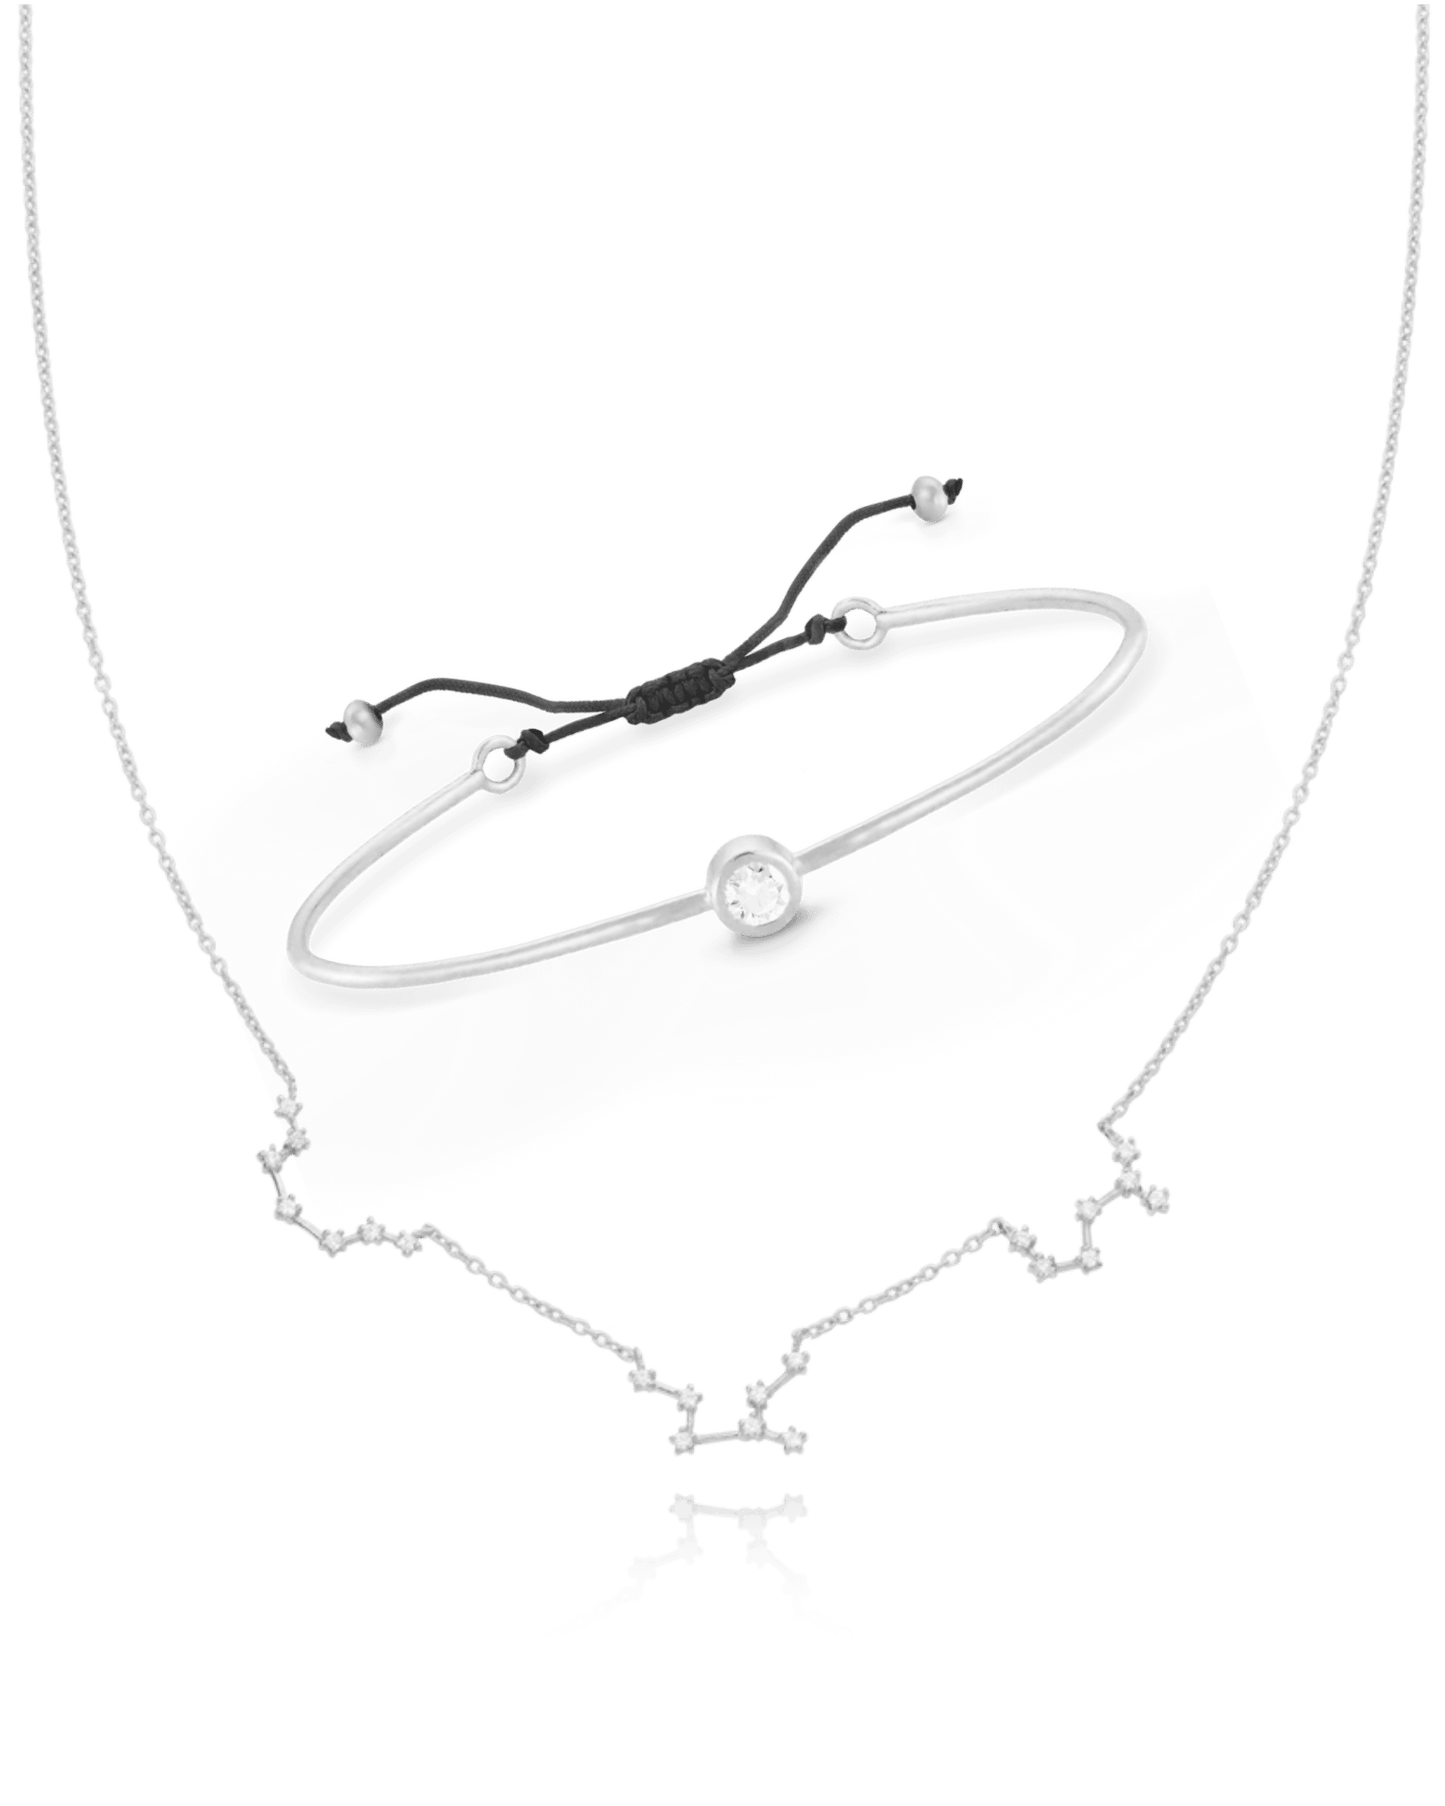 Set of Diamond Cord Bangle & Constellation Necklace - 18K Rose Vermeil Bracelets magal-dev 